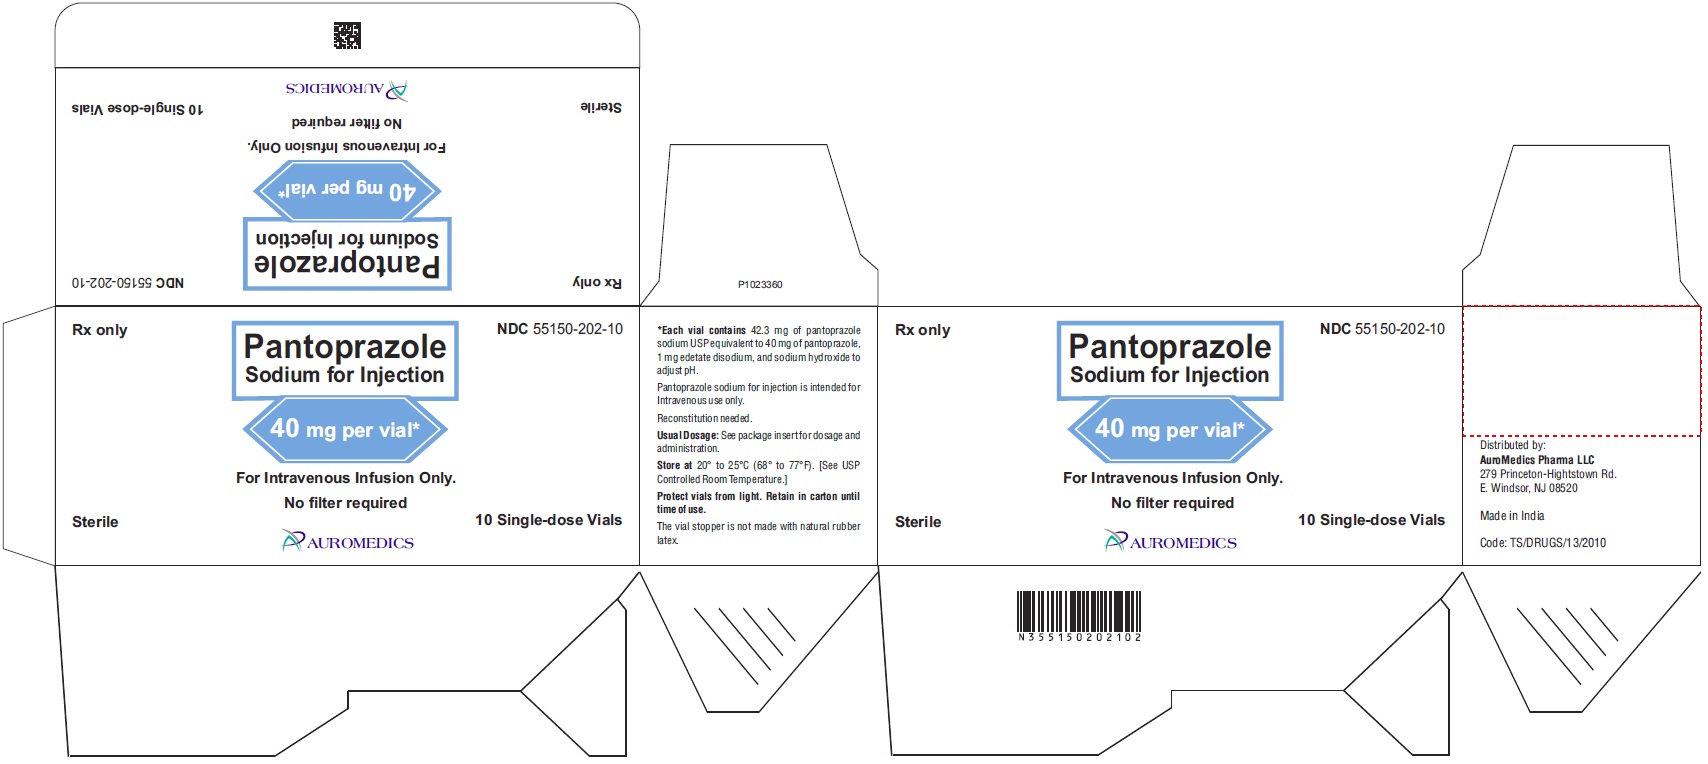 PACKAGE LABEL-PRINCIPAL DISPLAY PANEL - 40 mg per vial - Container-Carton (10 Vials)